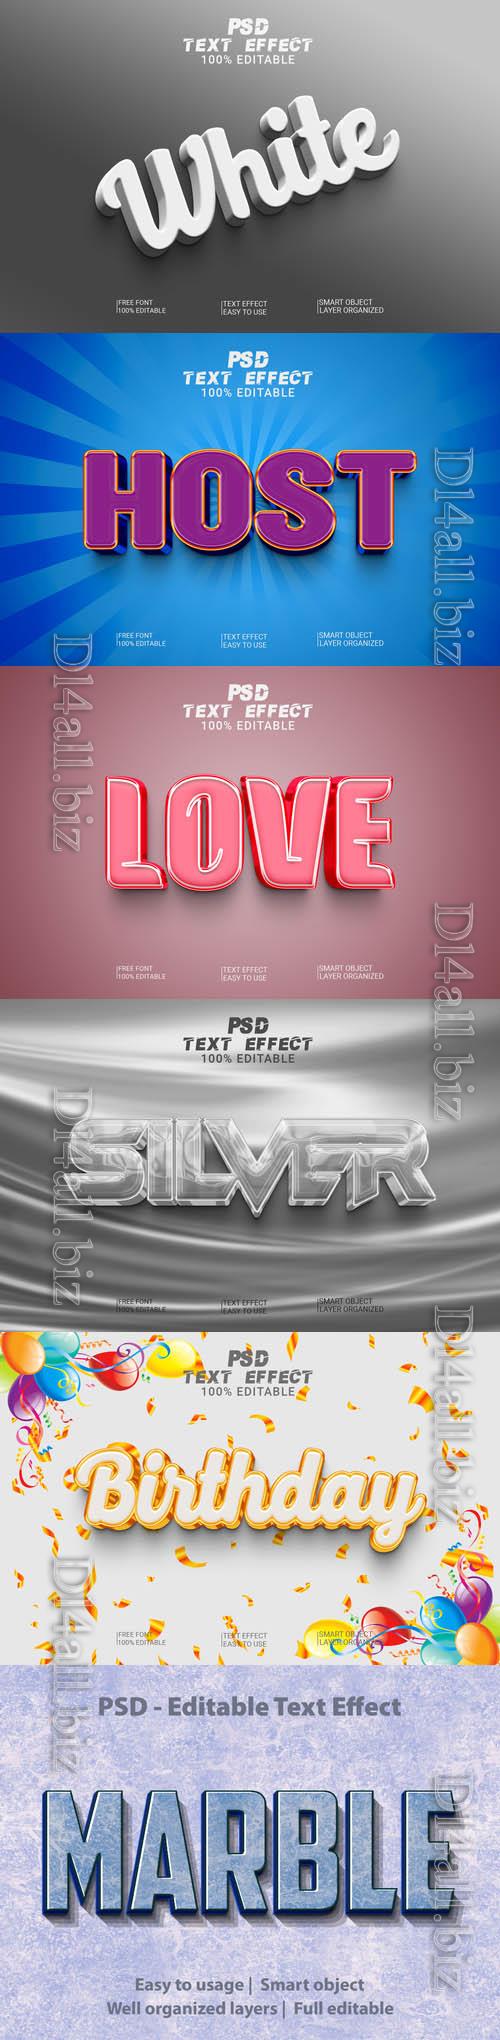 Psd style text effect editable set vol 441